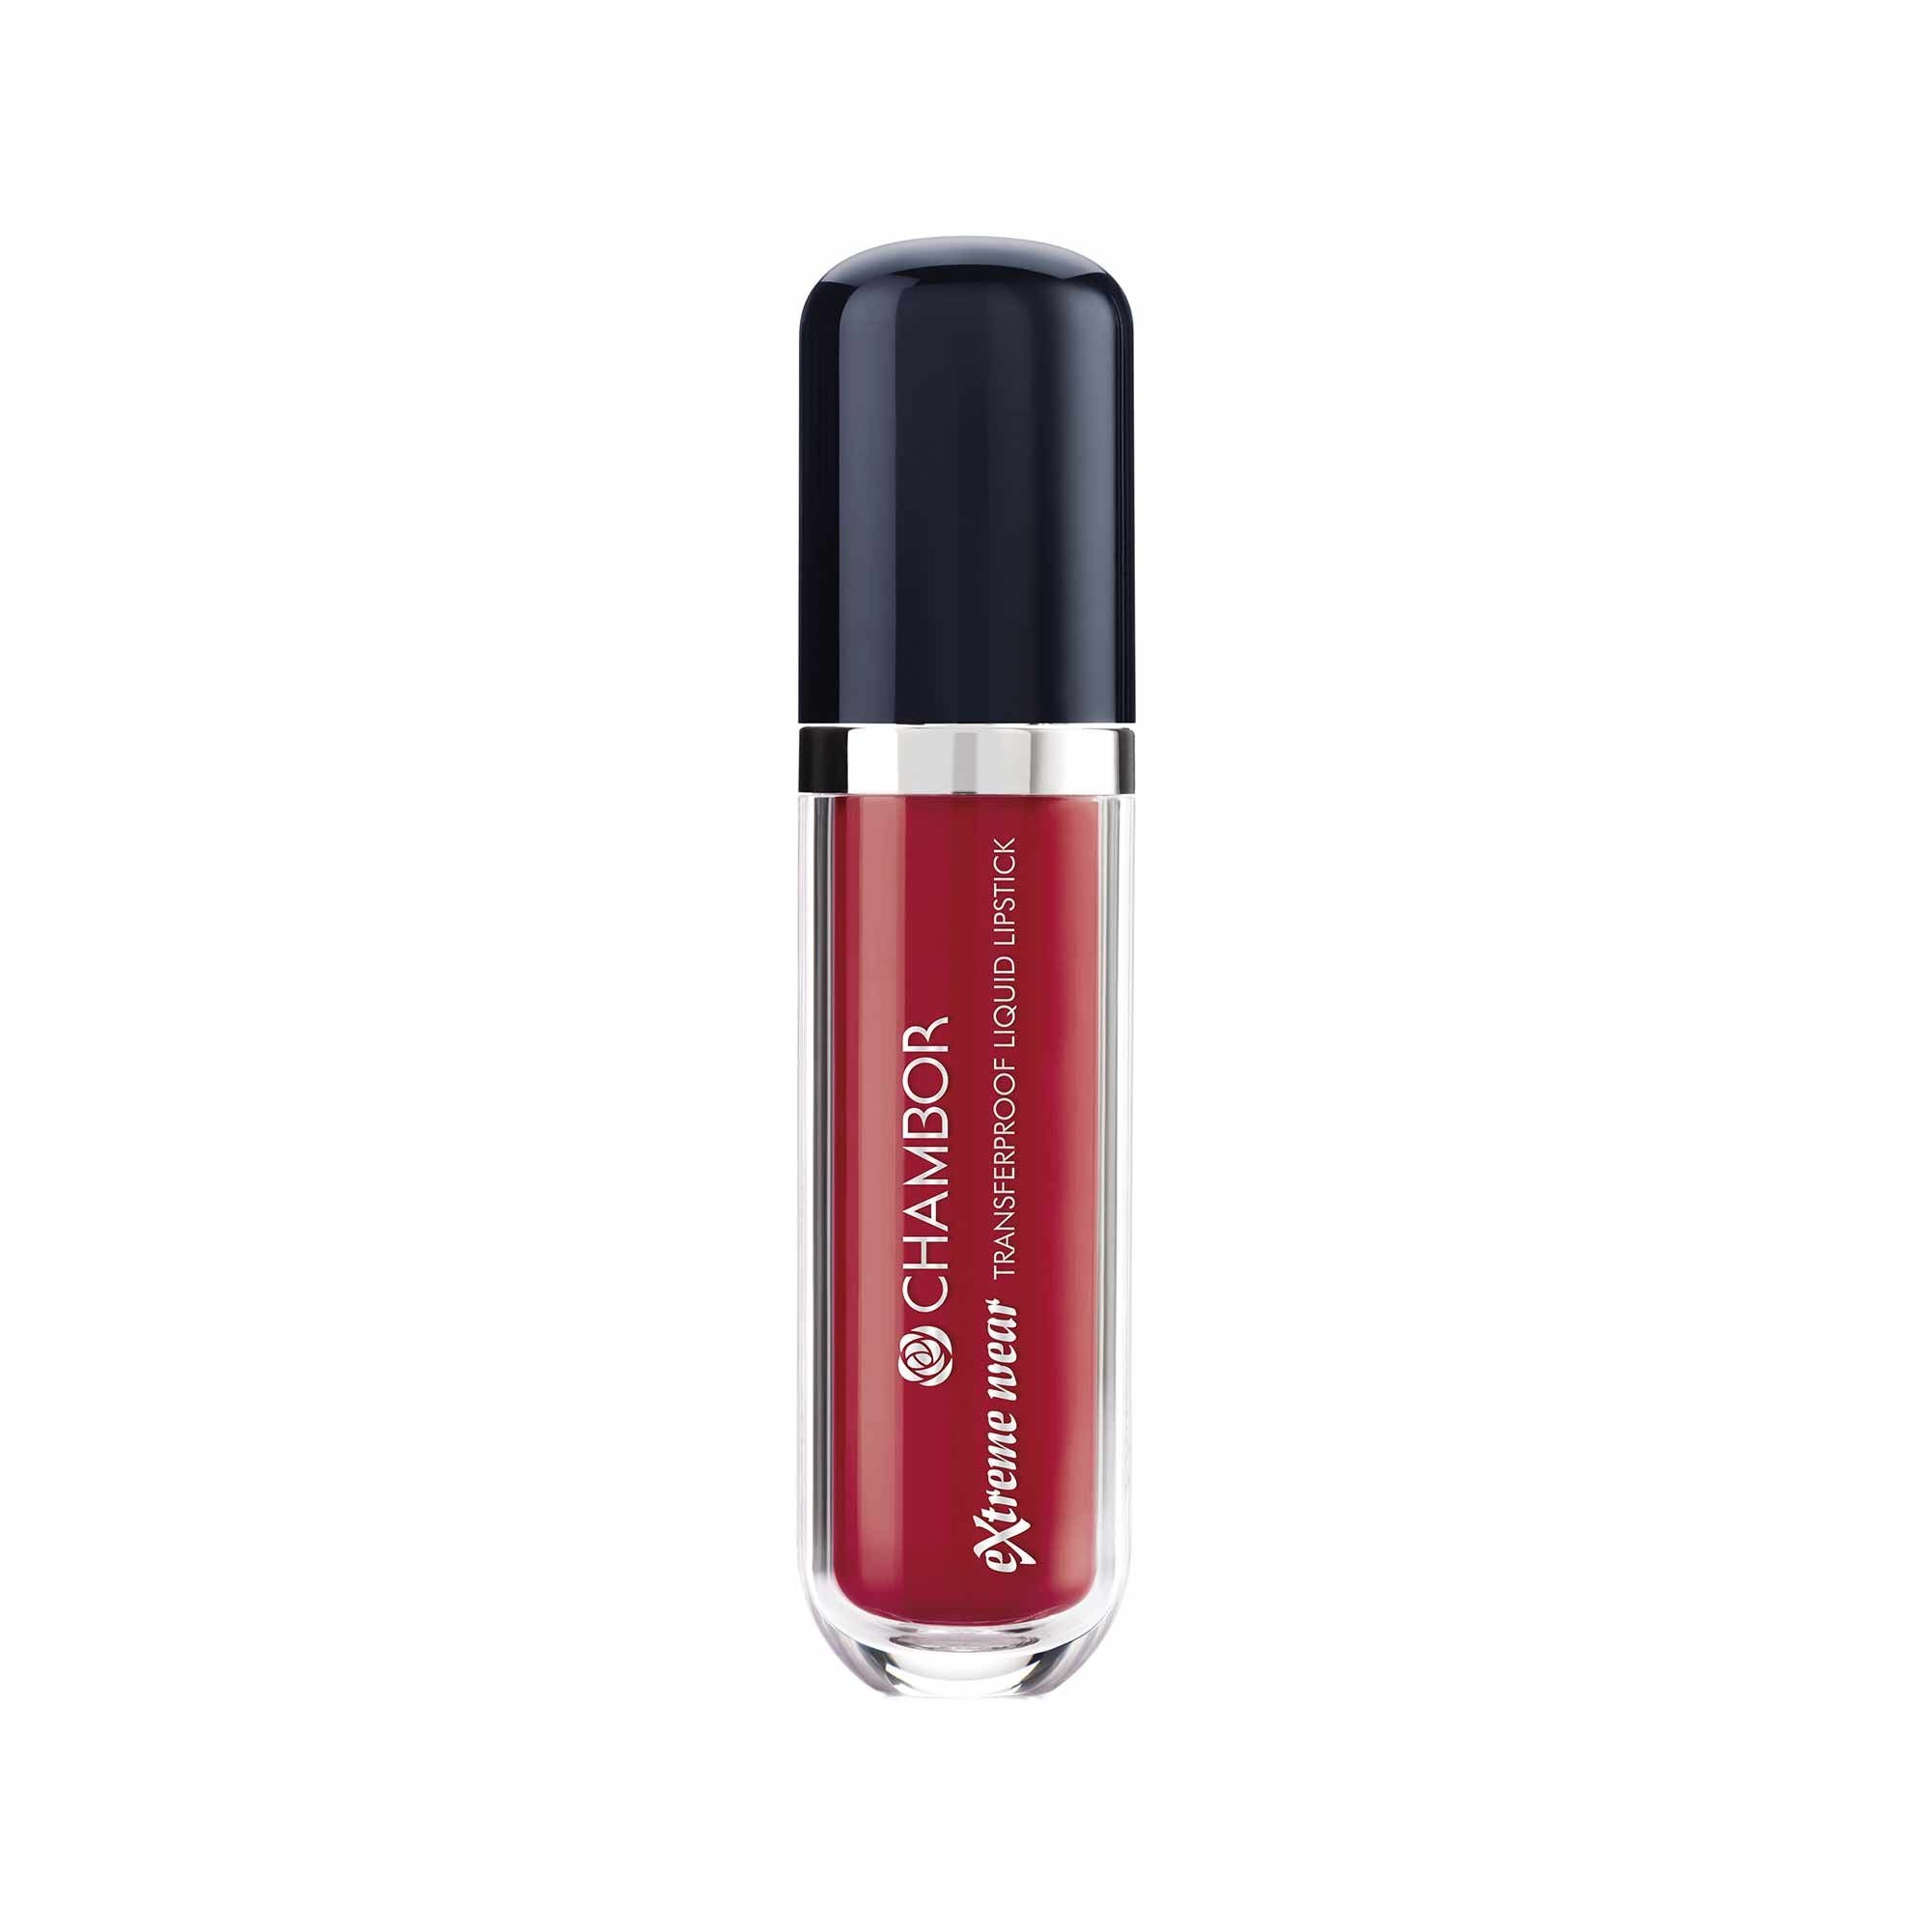 Chambor Extreme Wear Transferproof Liquid Lipstick - Desire #433